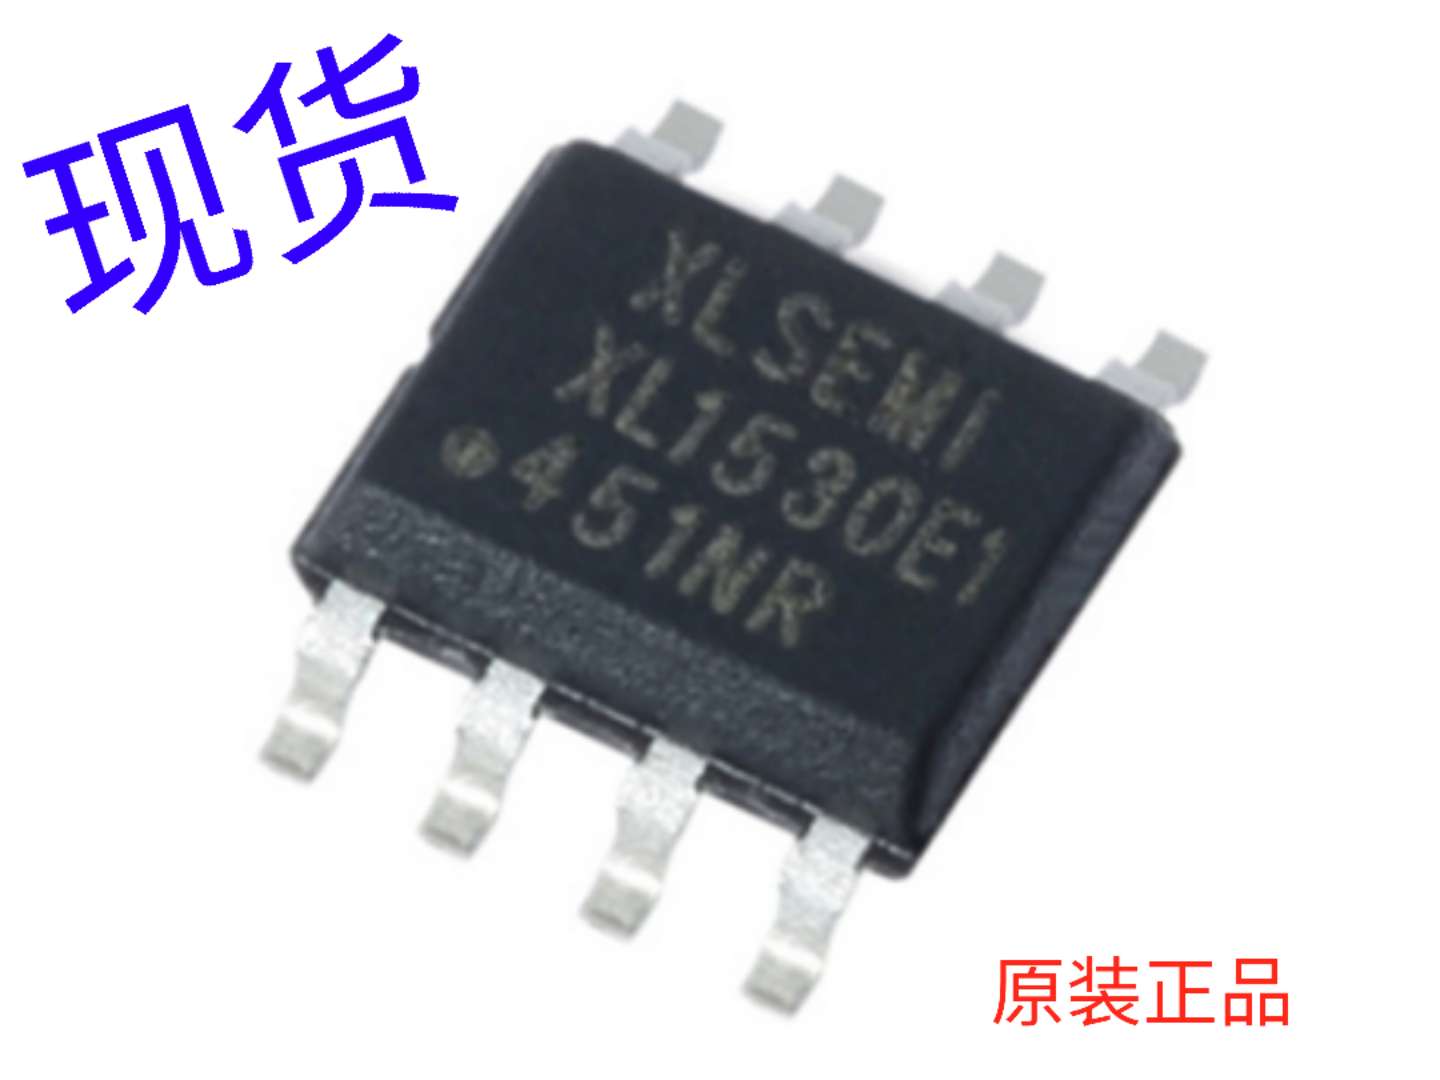 XL 1530 电源变换器芯片